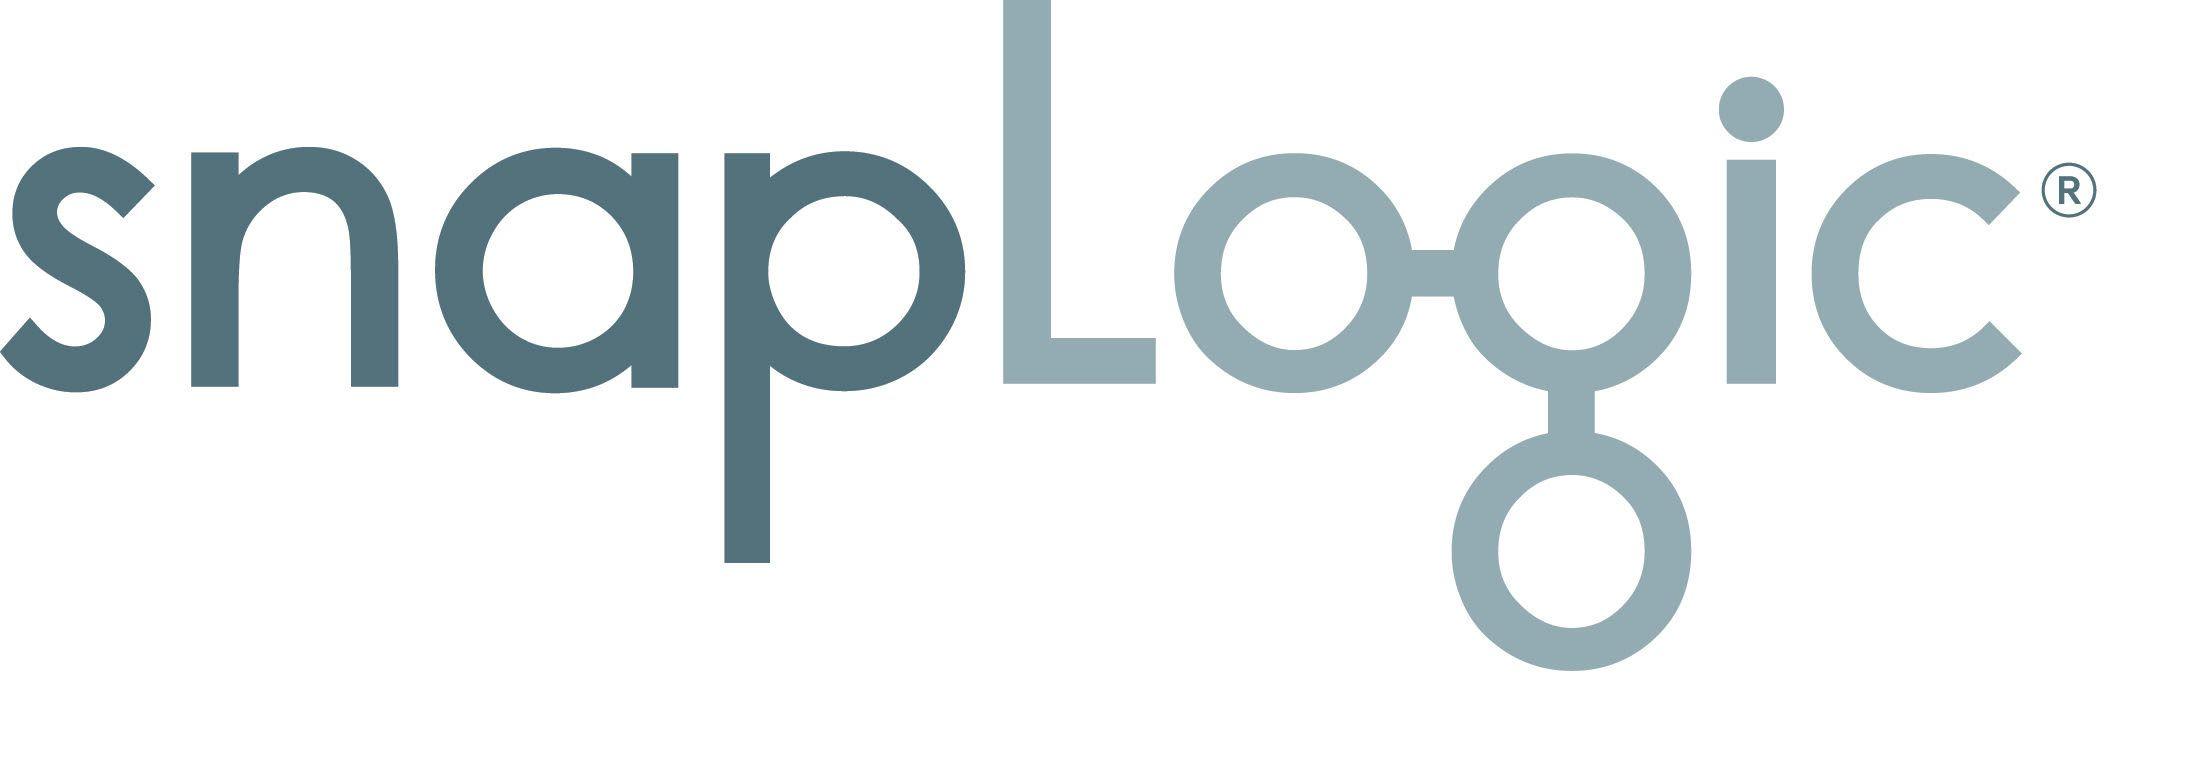 SnapLogic Logo - Snaplogic Logo | EM360